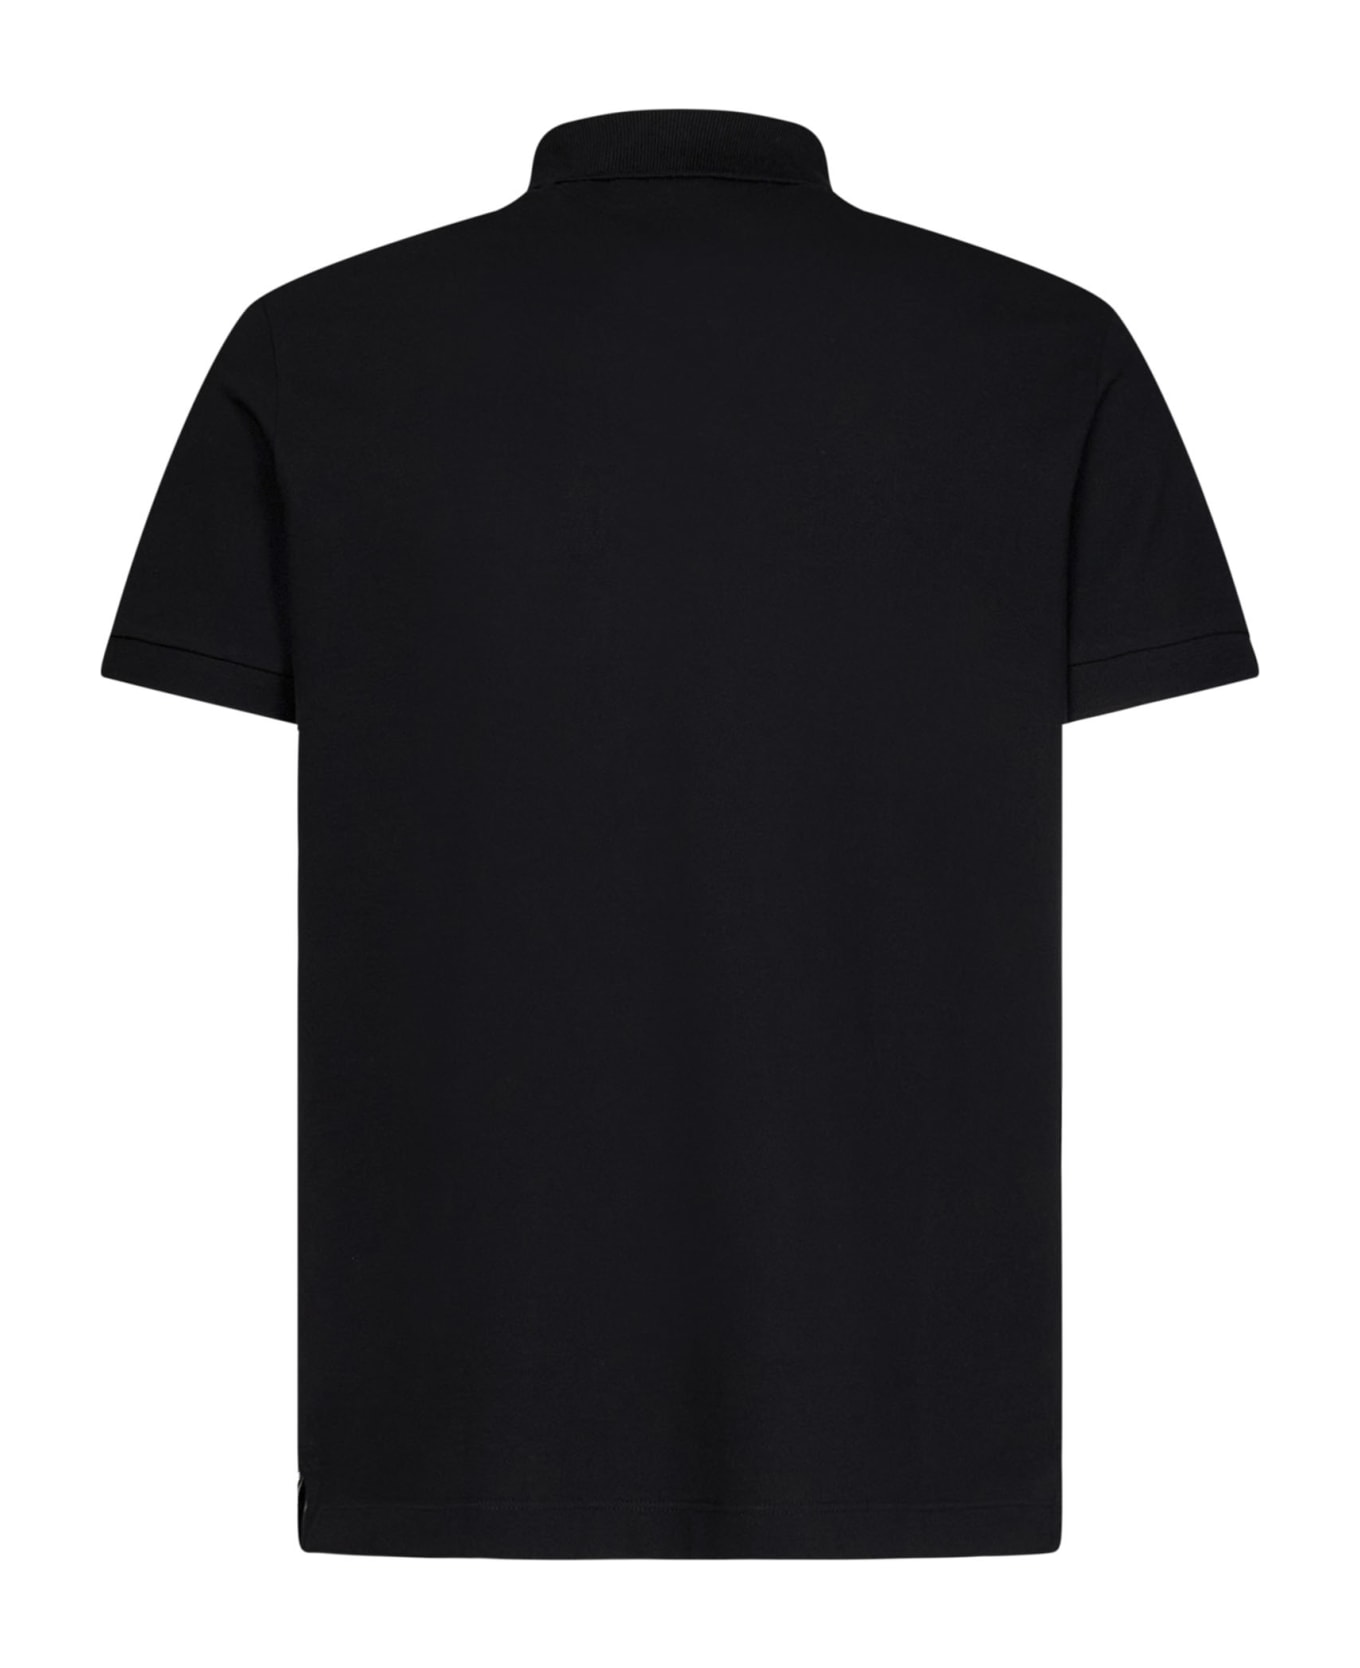 Stone Island Polo Shirt - Black